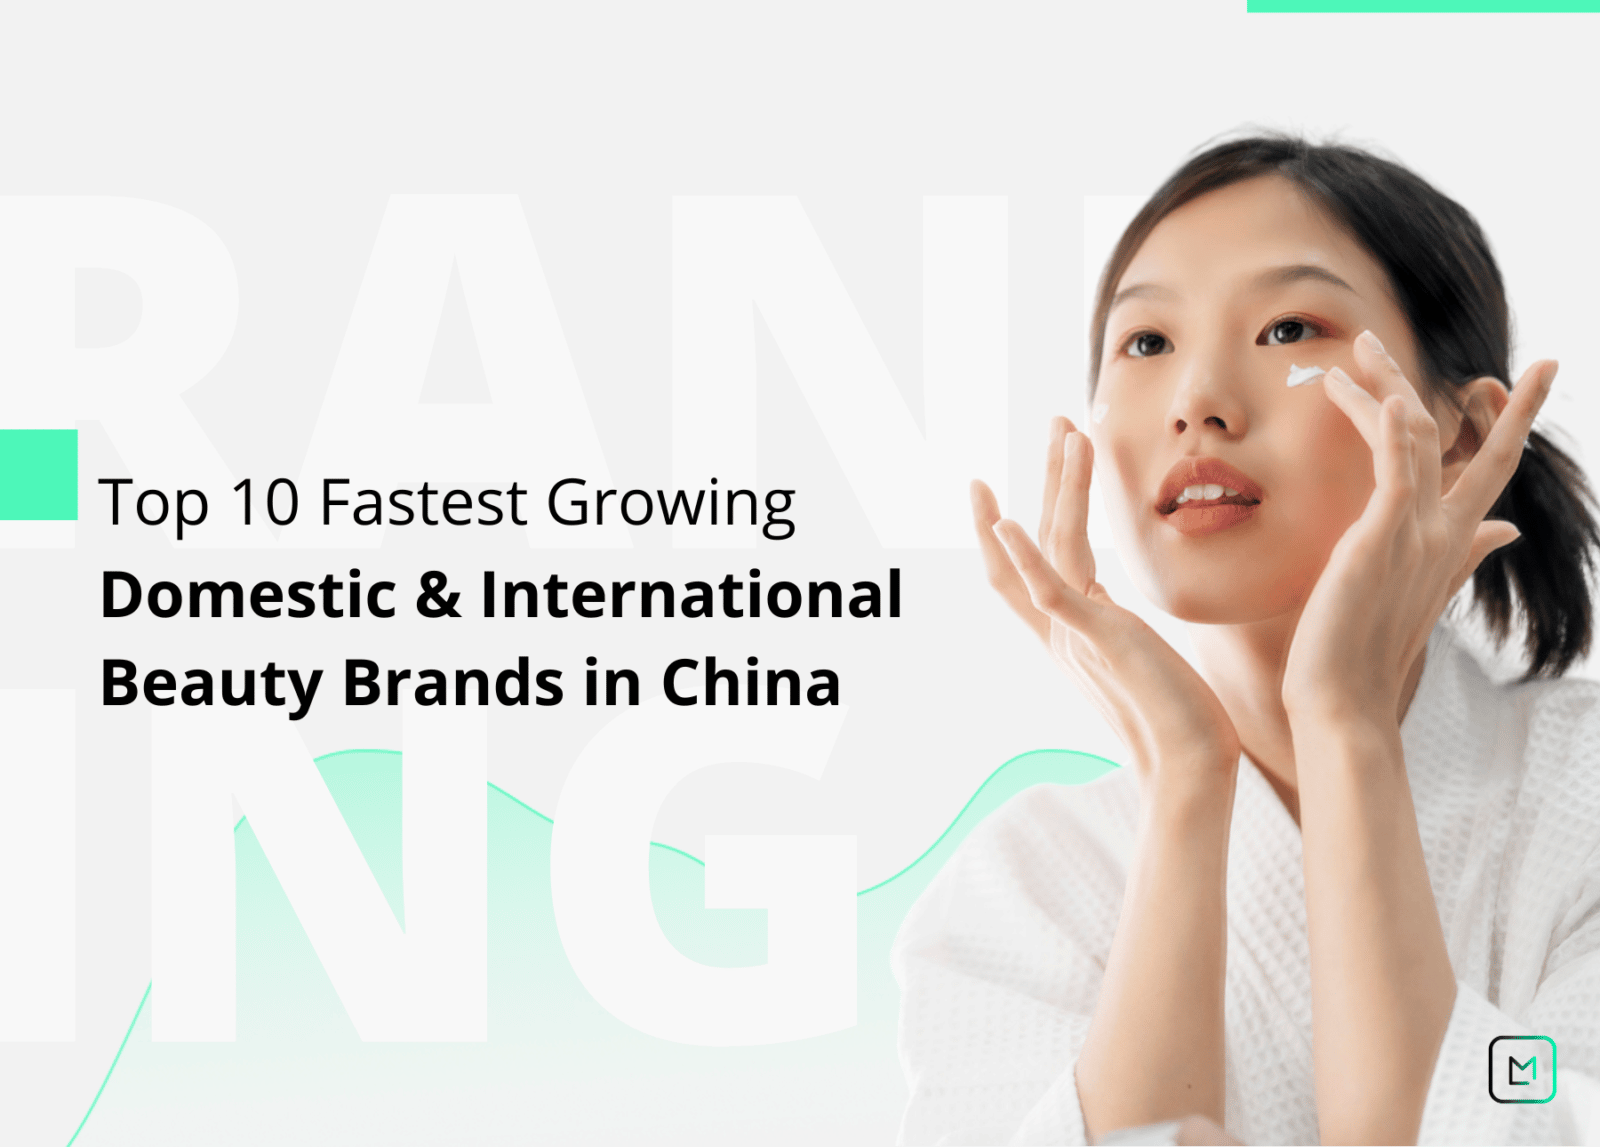 China: Top 10 Growing Local & Intl Beauty Brands - Launchmetrics